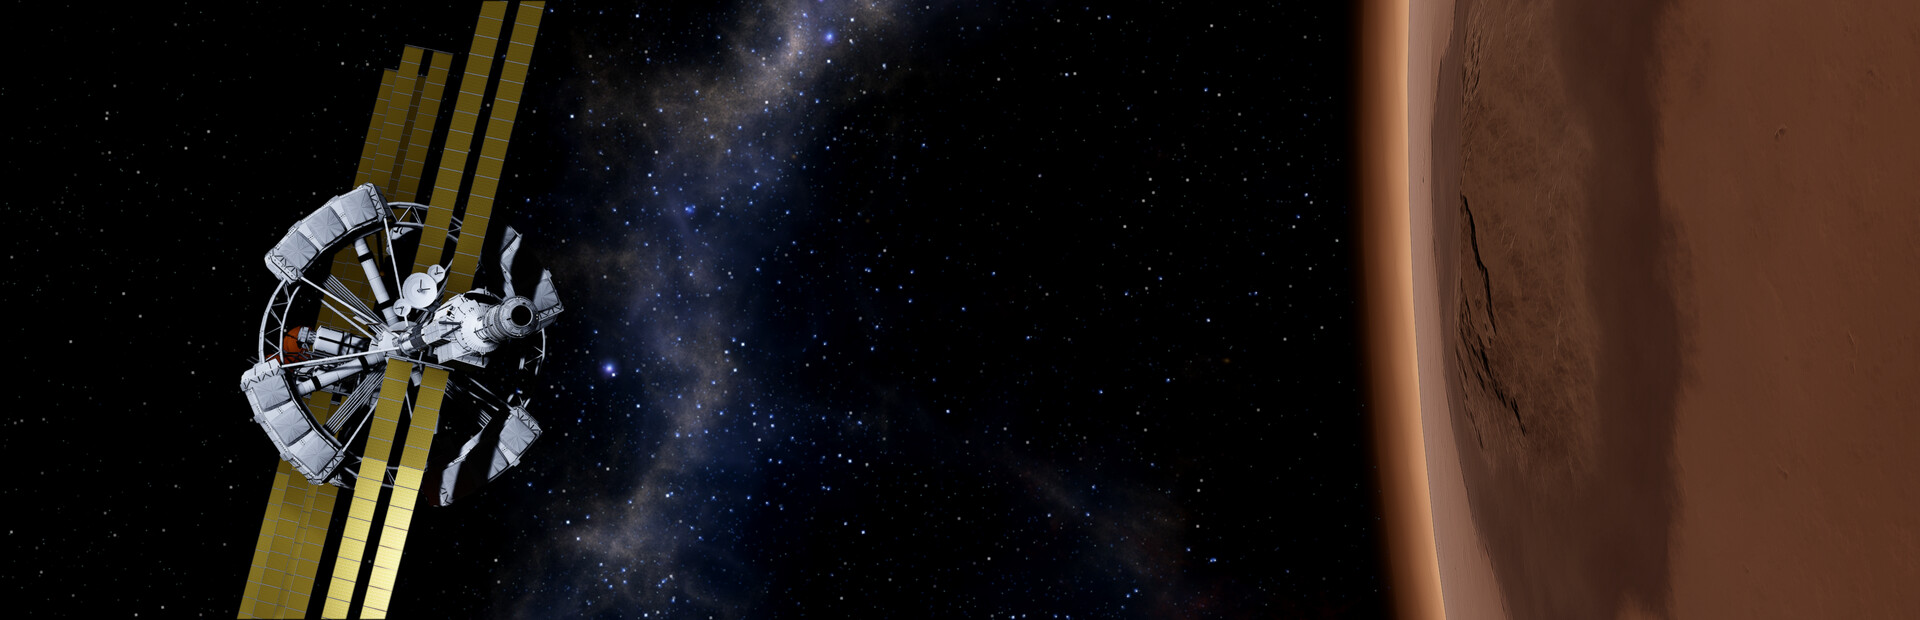 Juno: New Origins cover image